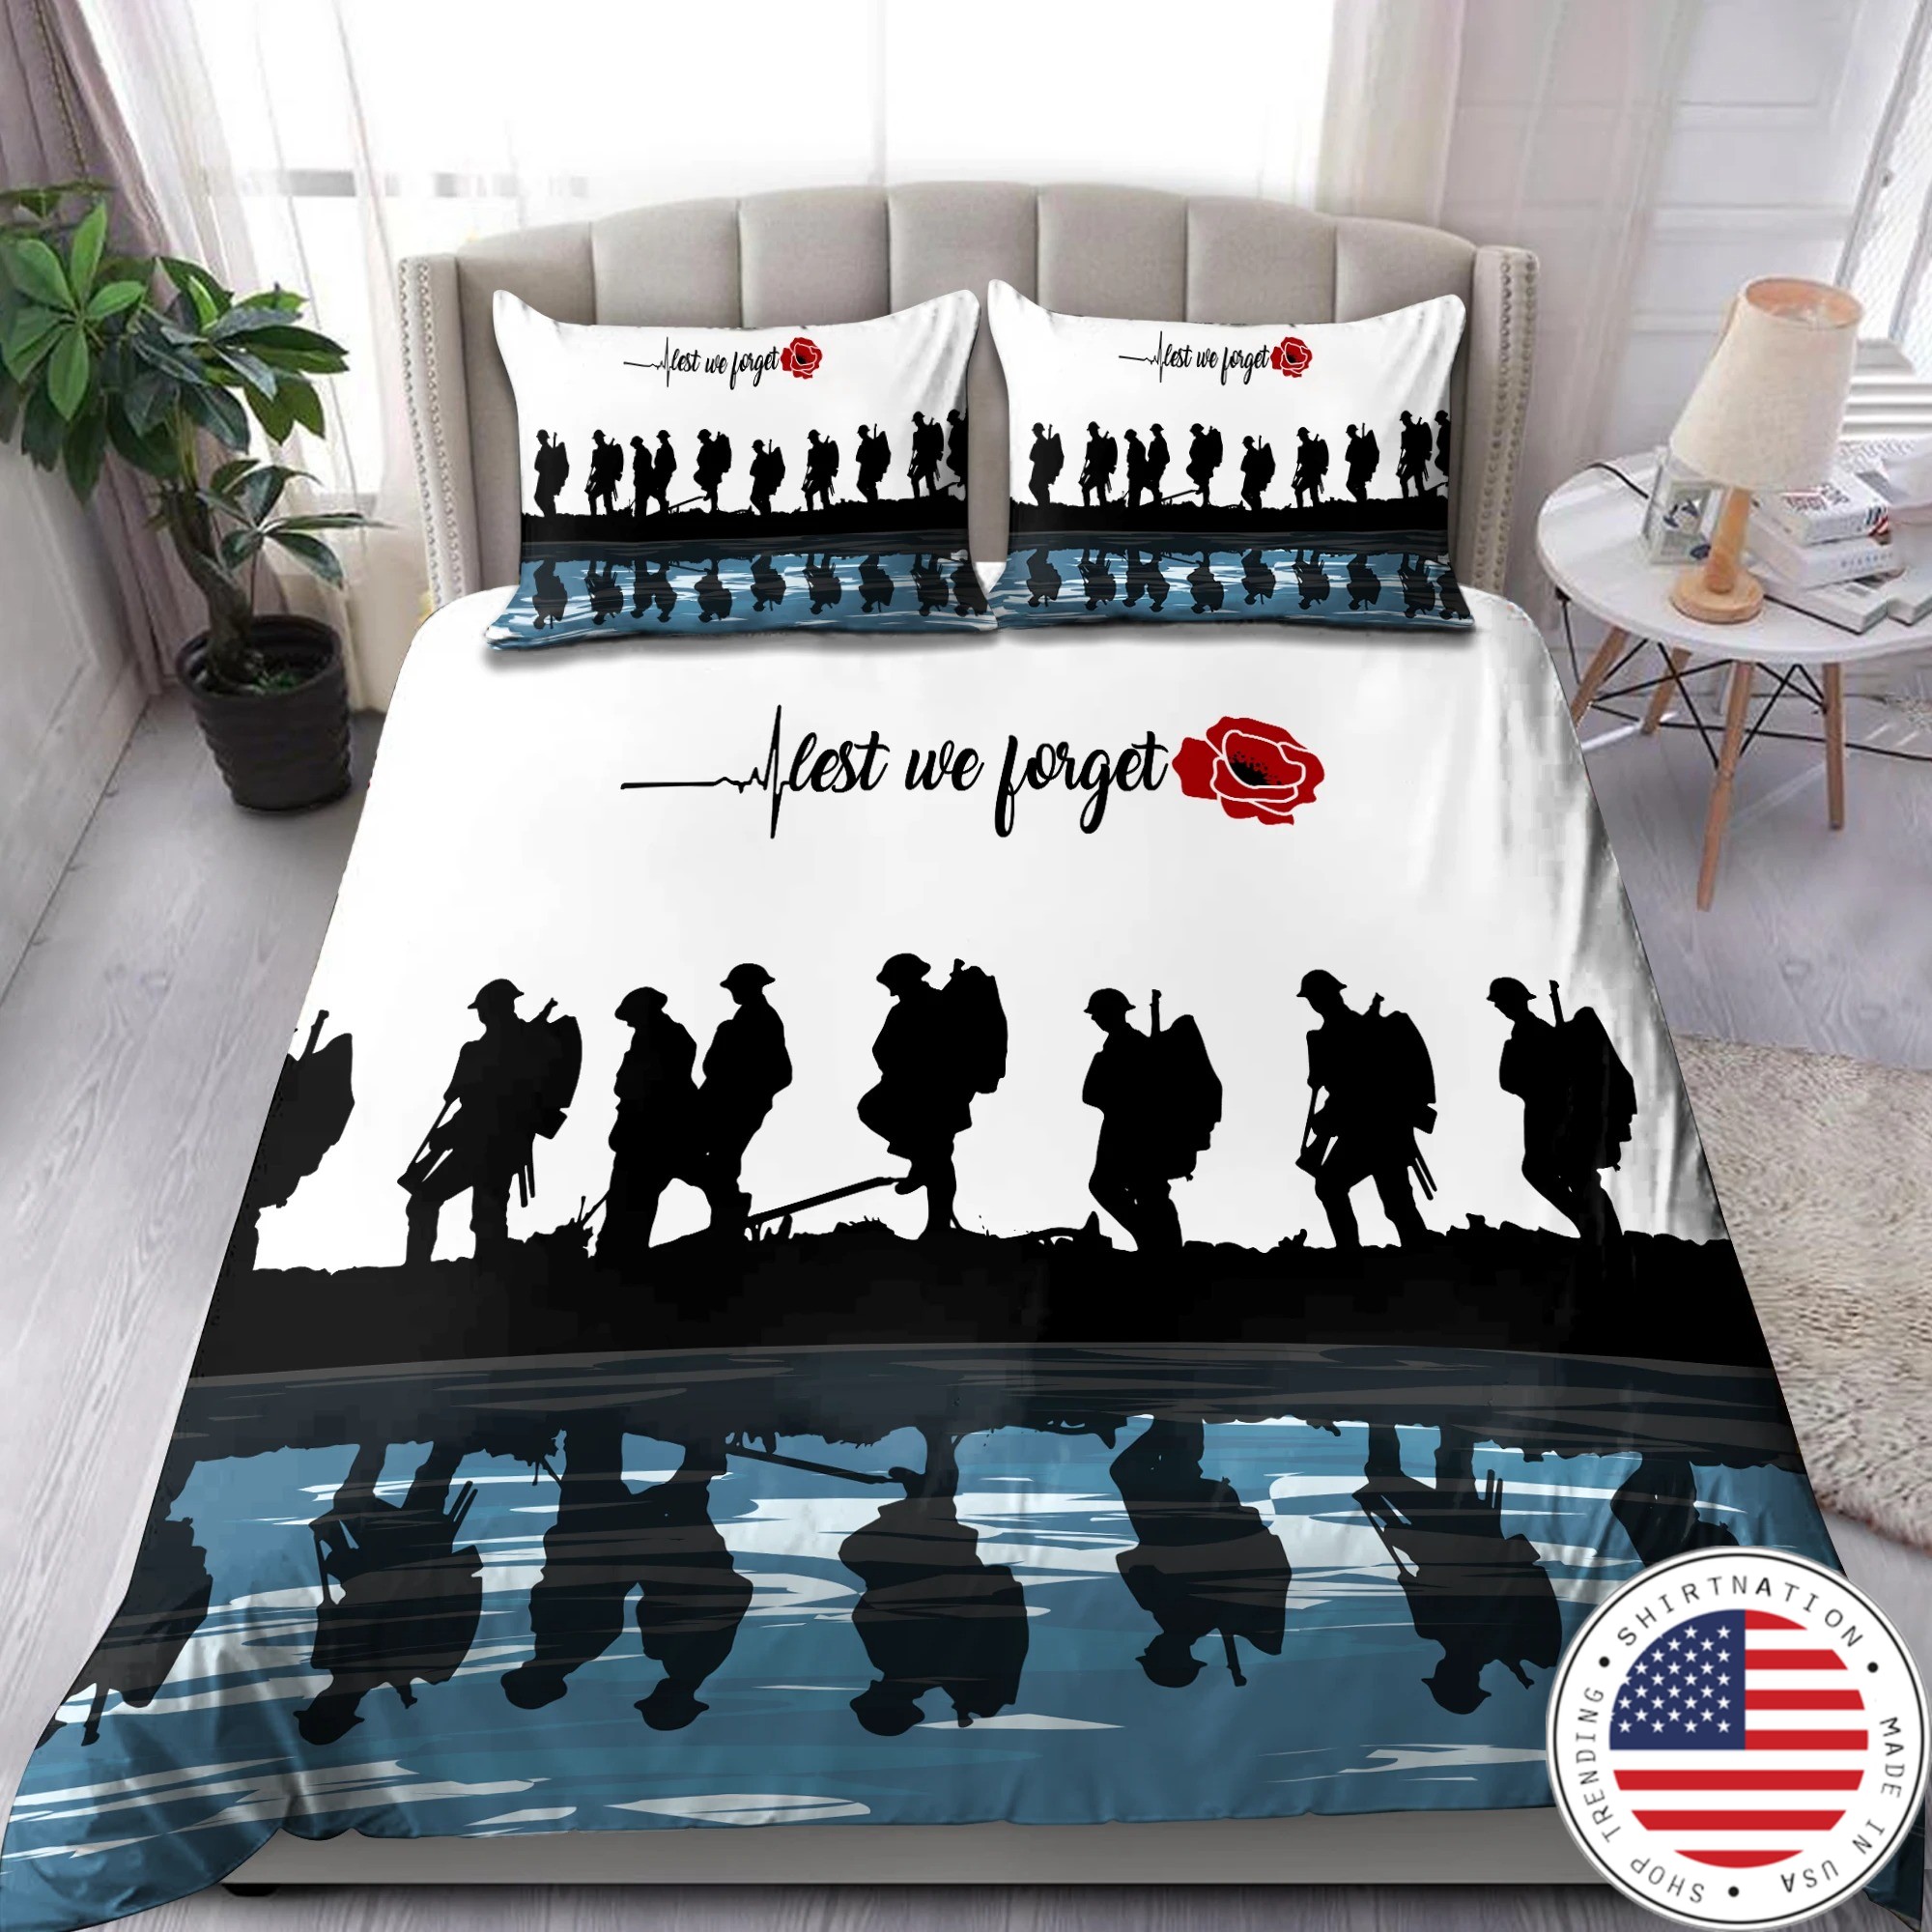 UK Veteran Let we forget honor the fallen bedding set